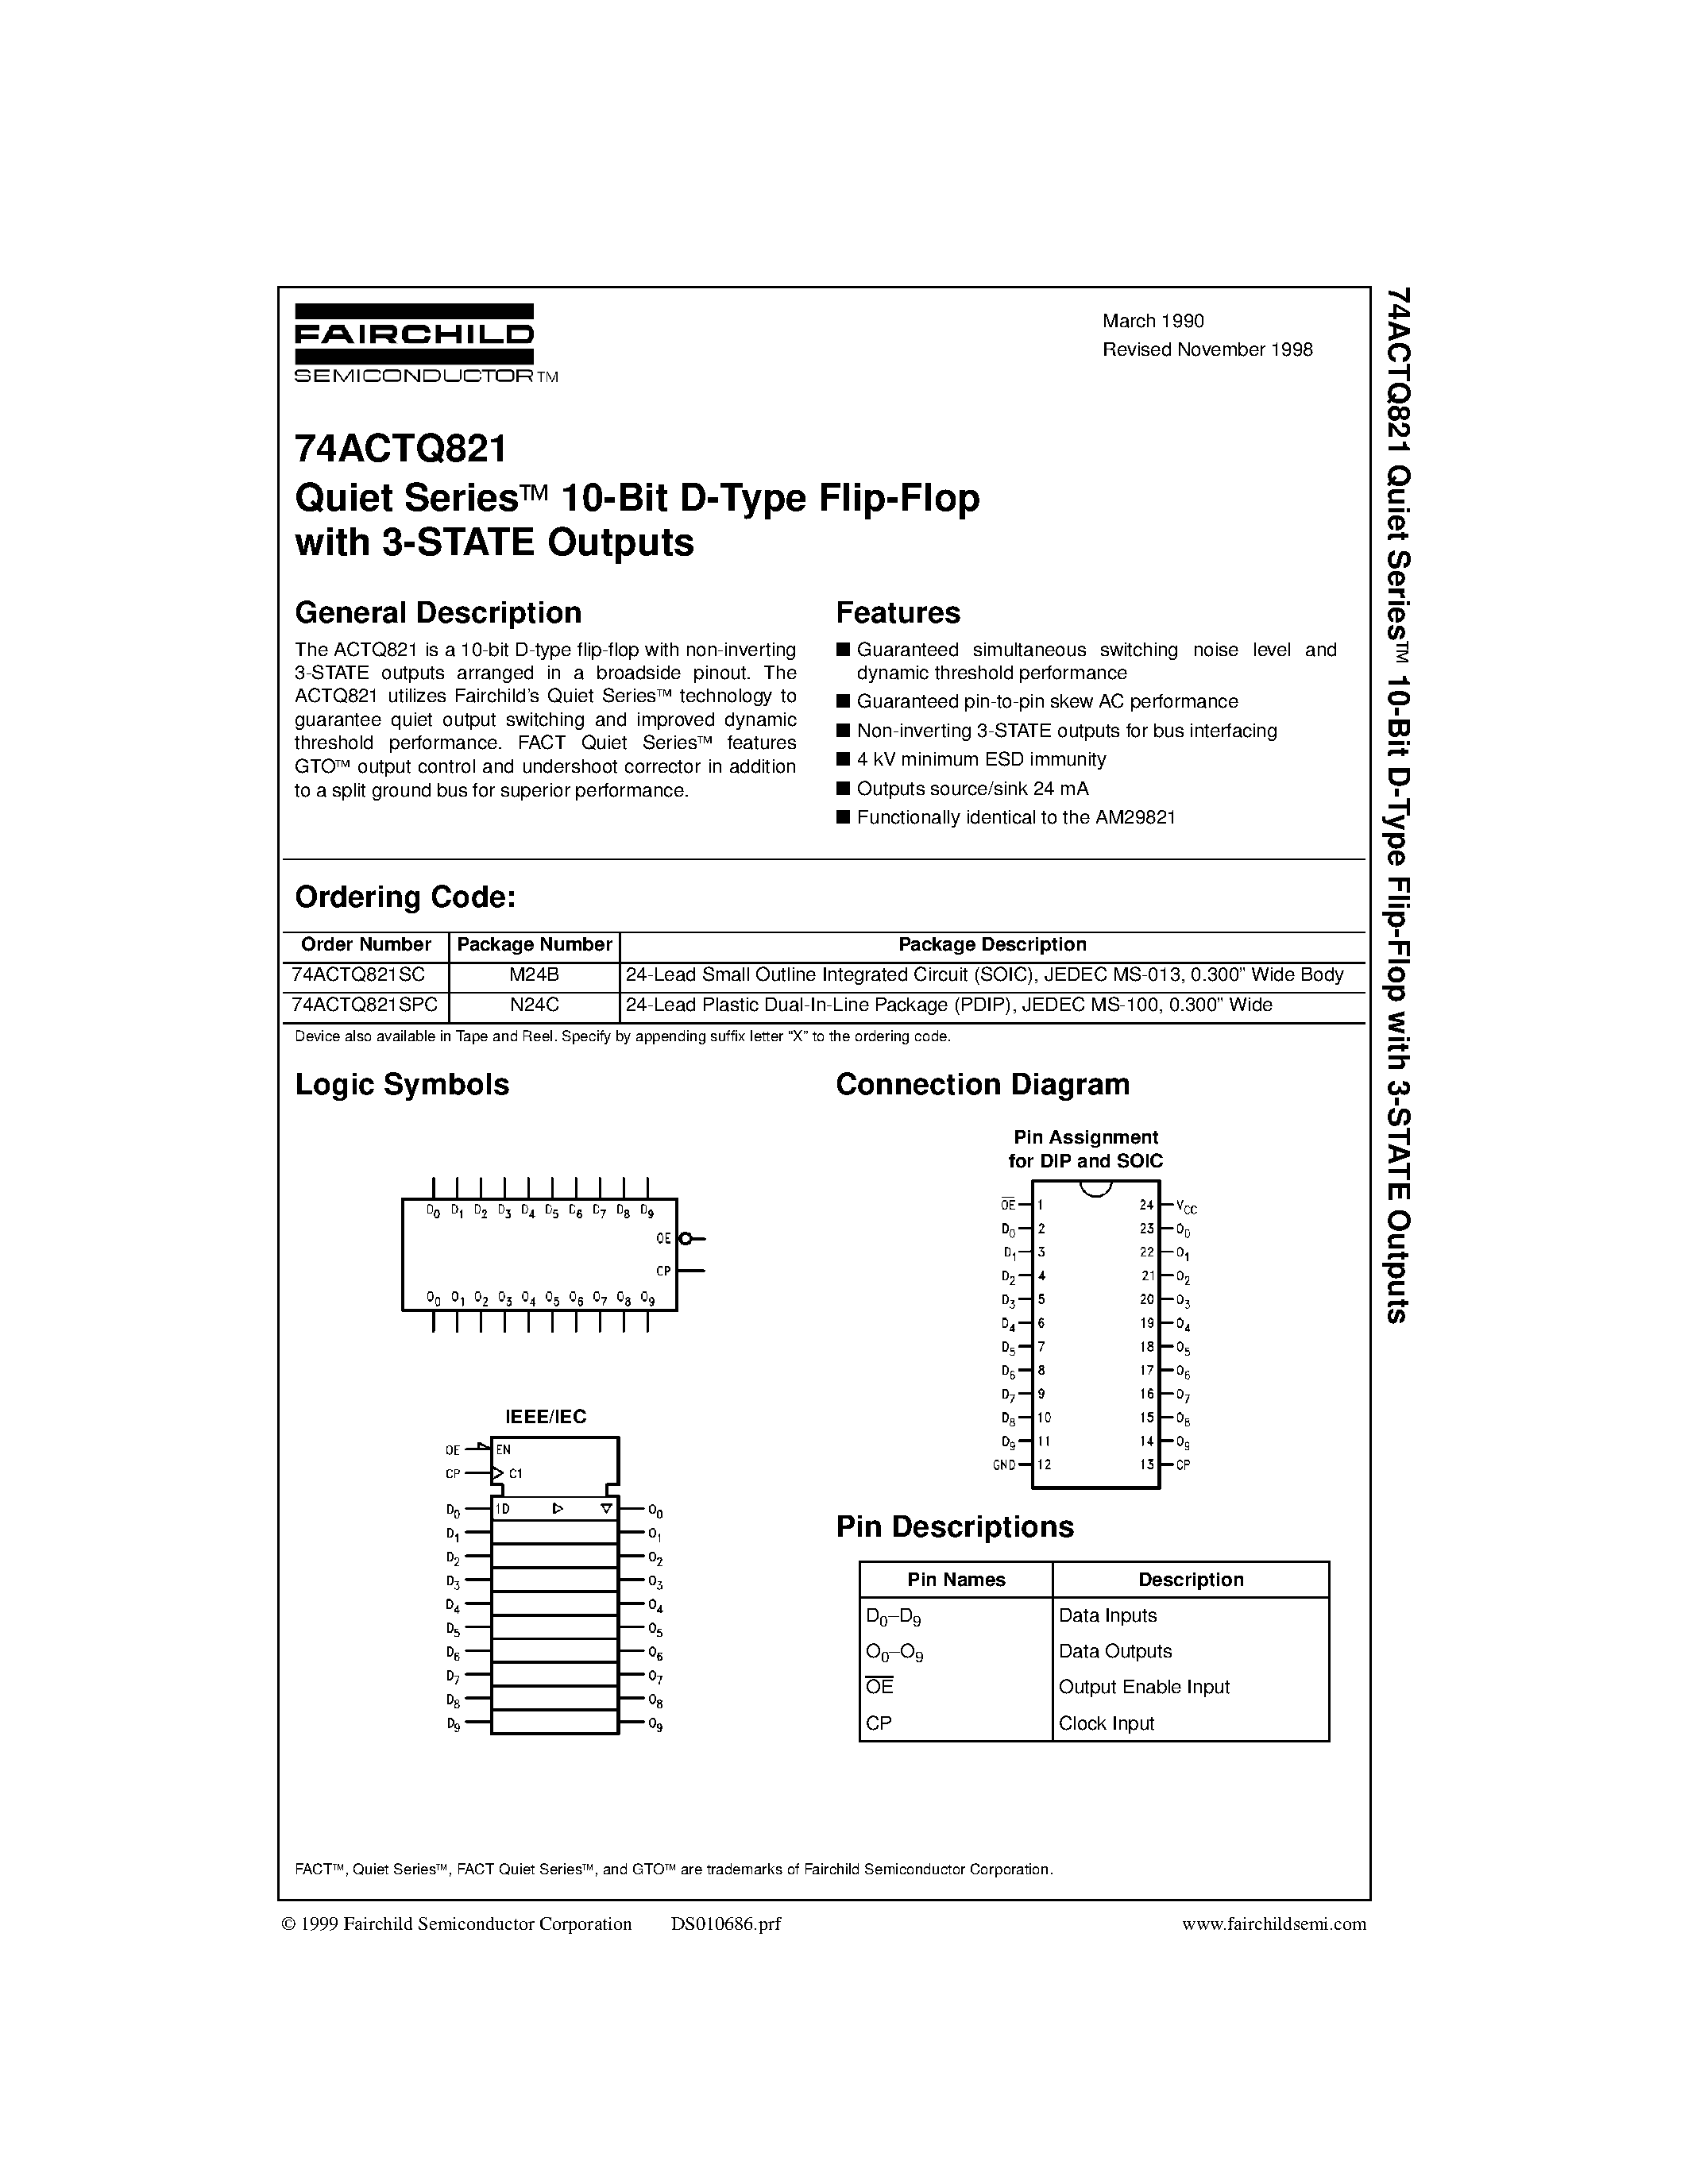 Даташит 74ACTQ821 - Quiet Seriesa 10-Bit D-Type Flip-Flop with 3-STATE Outputs страница 1